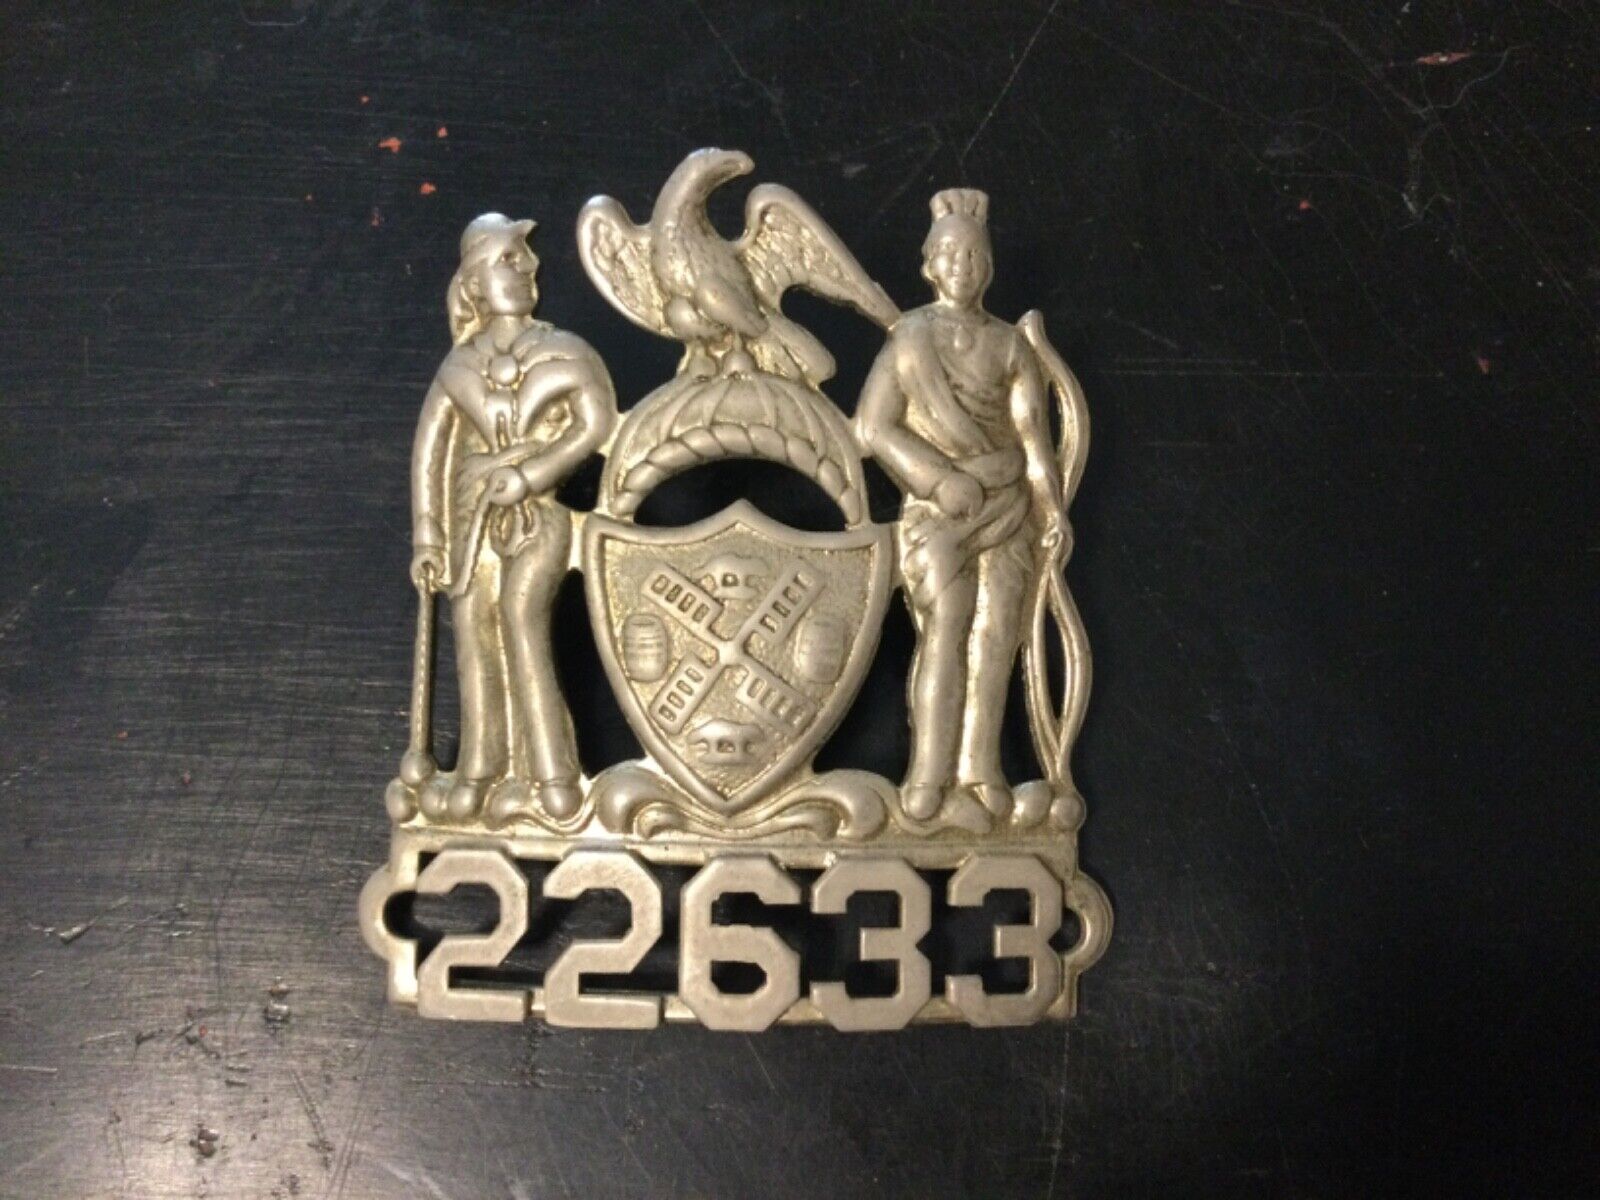 Vintage Cap Badge NYC Coat of Arms #22633 WW2 Era New York Police